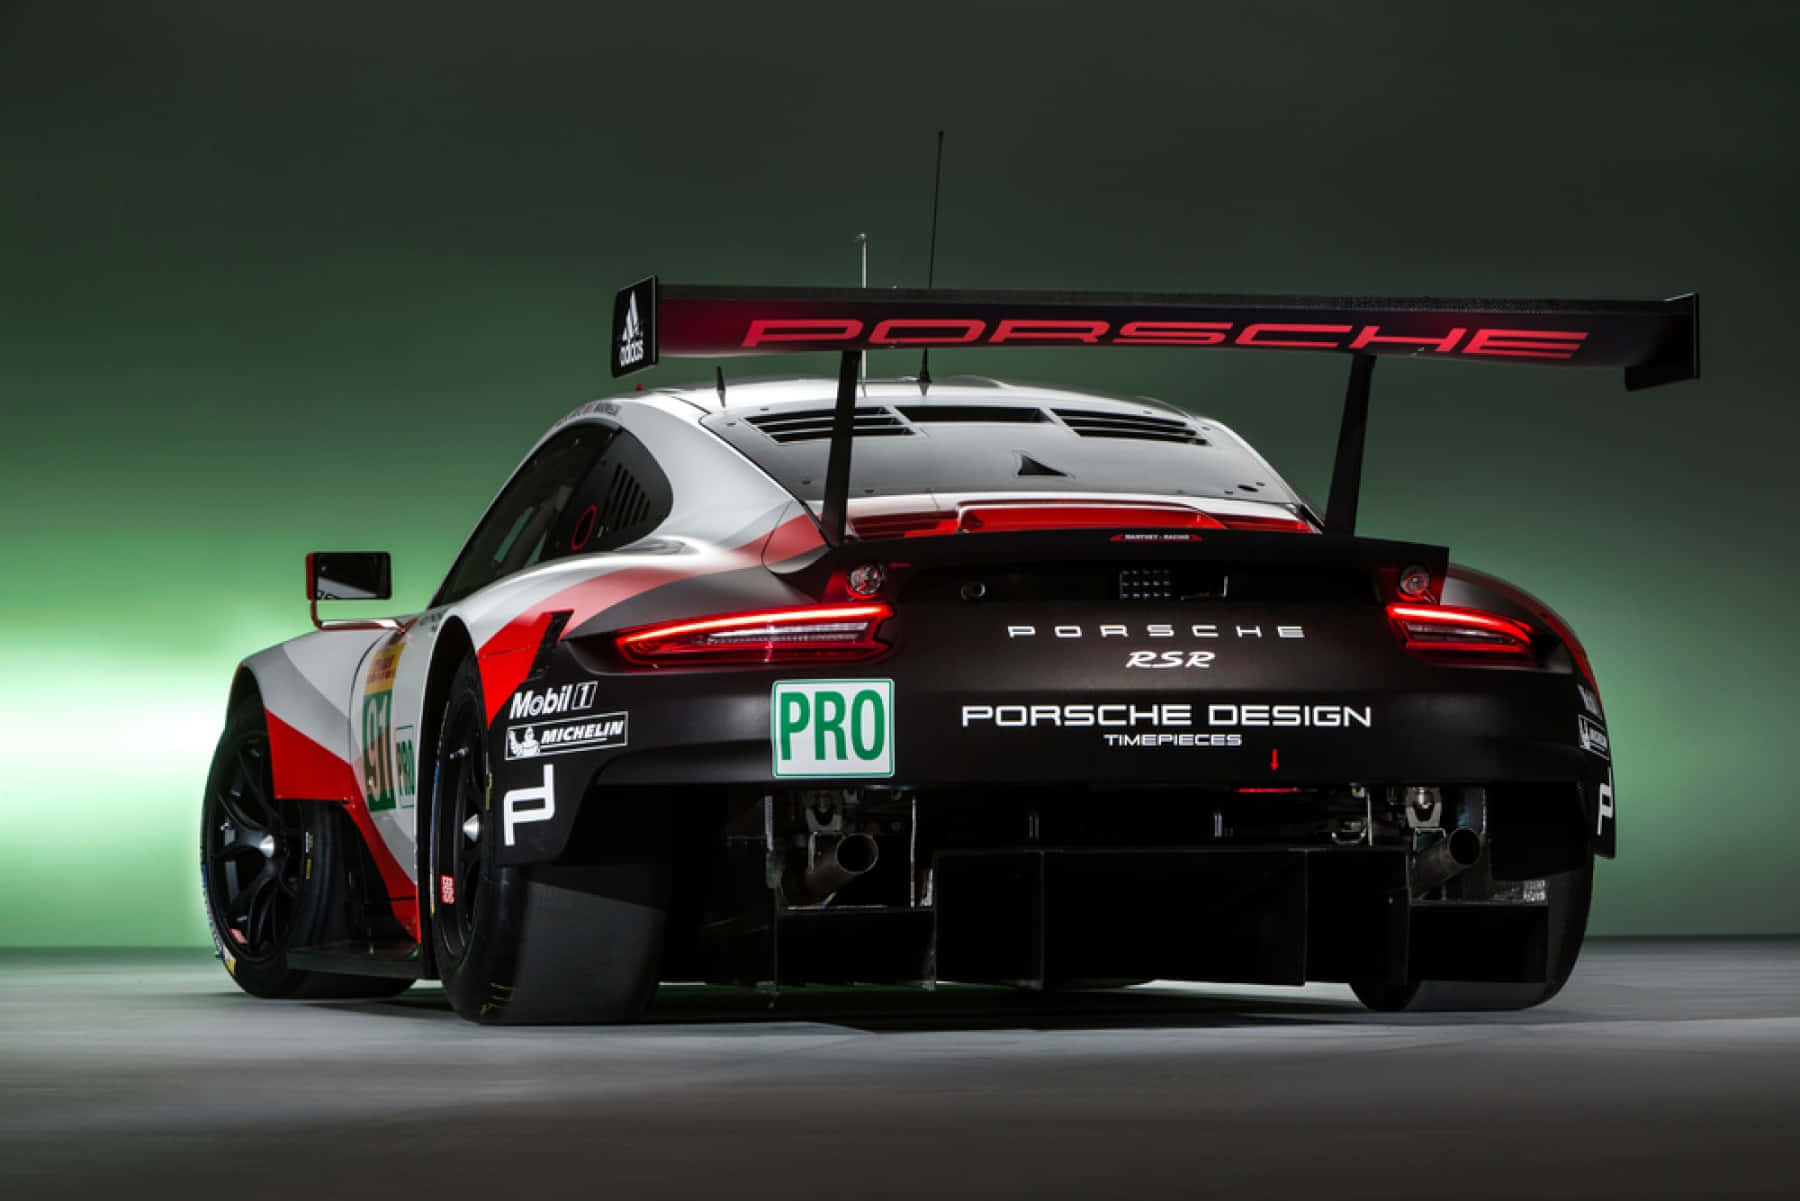 Caption: Sleek Porsche Luxury Sports Car on Open Road